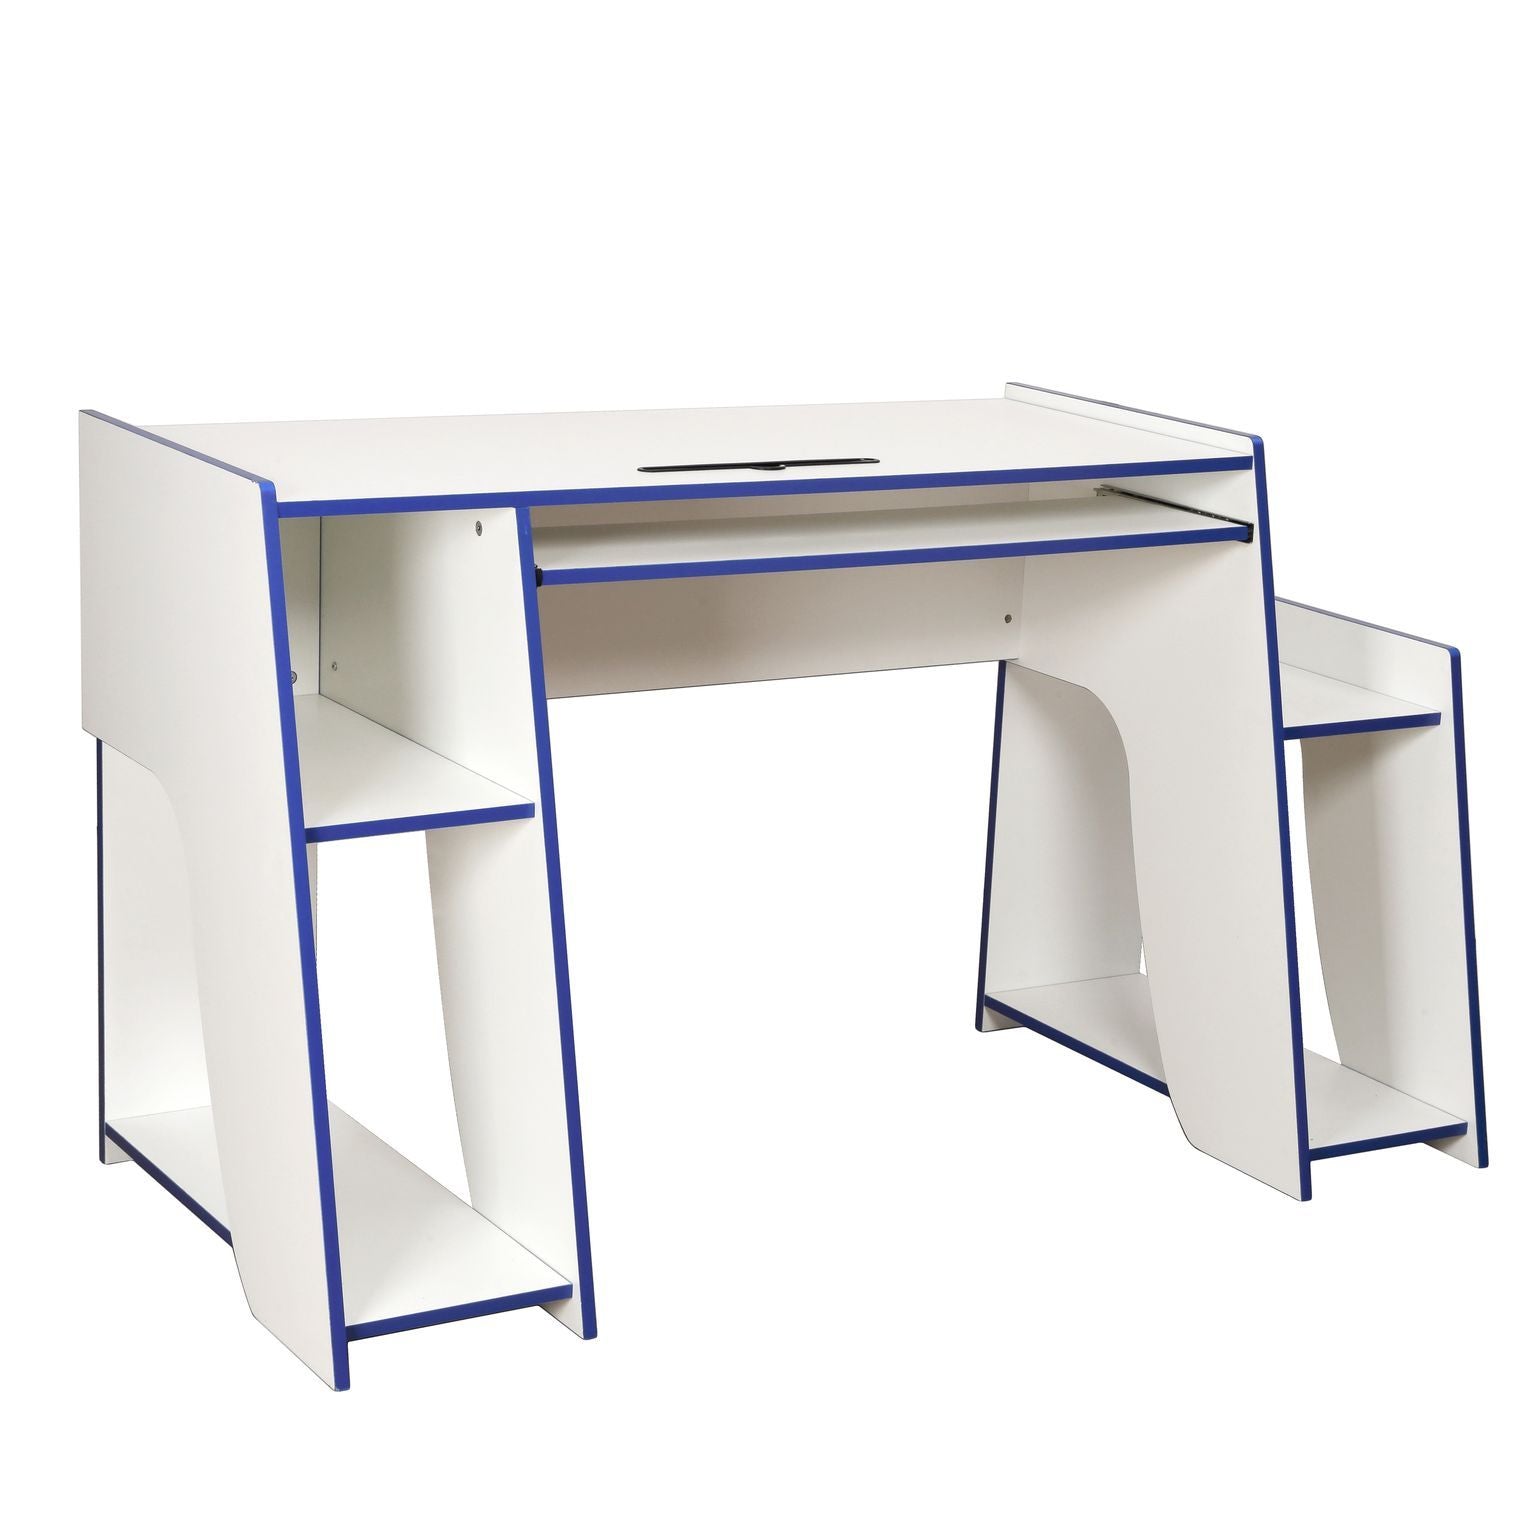 Virtuoso 'Horizon 5' Gaming Desk - White/Blue